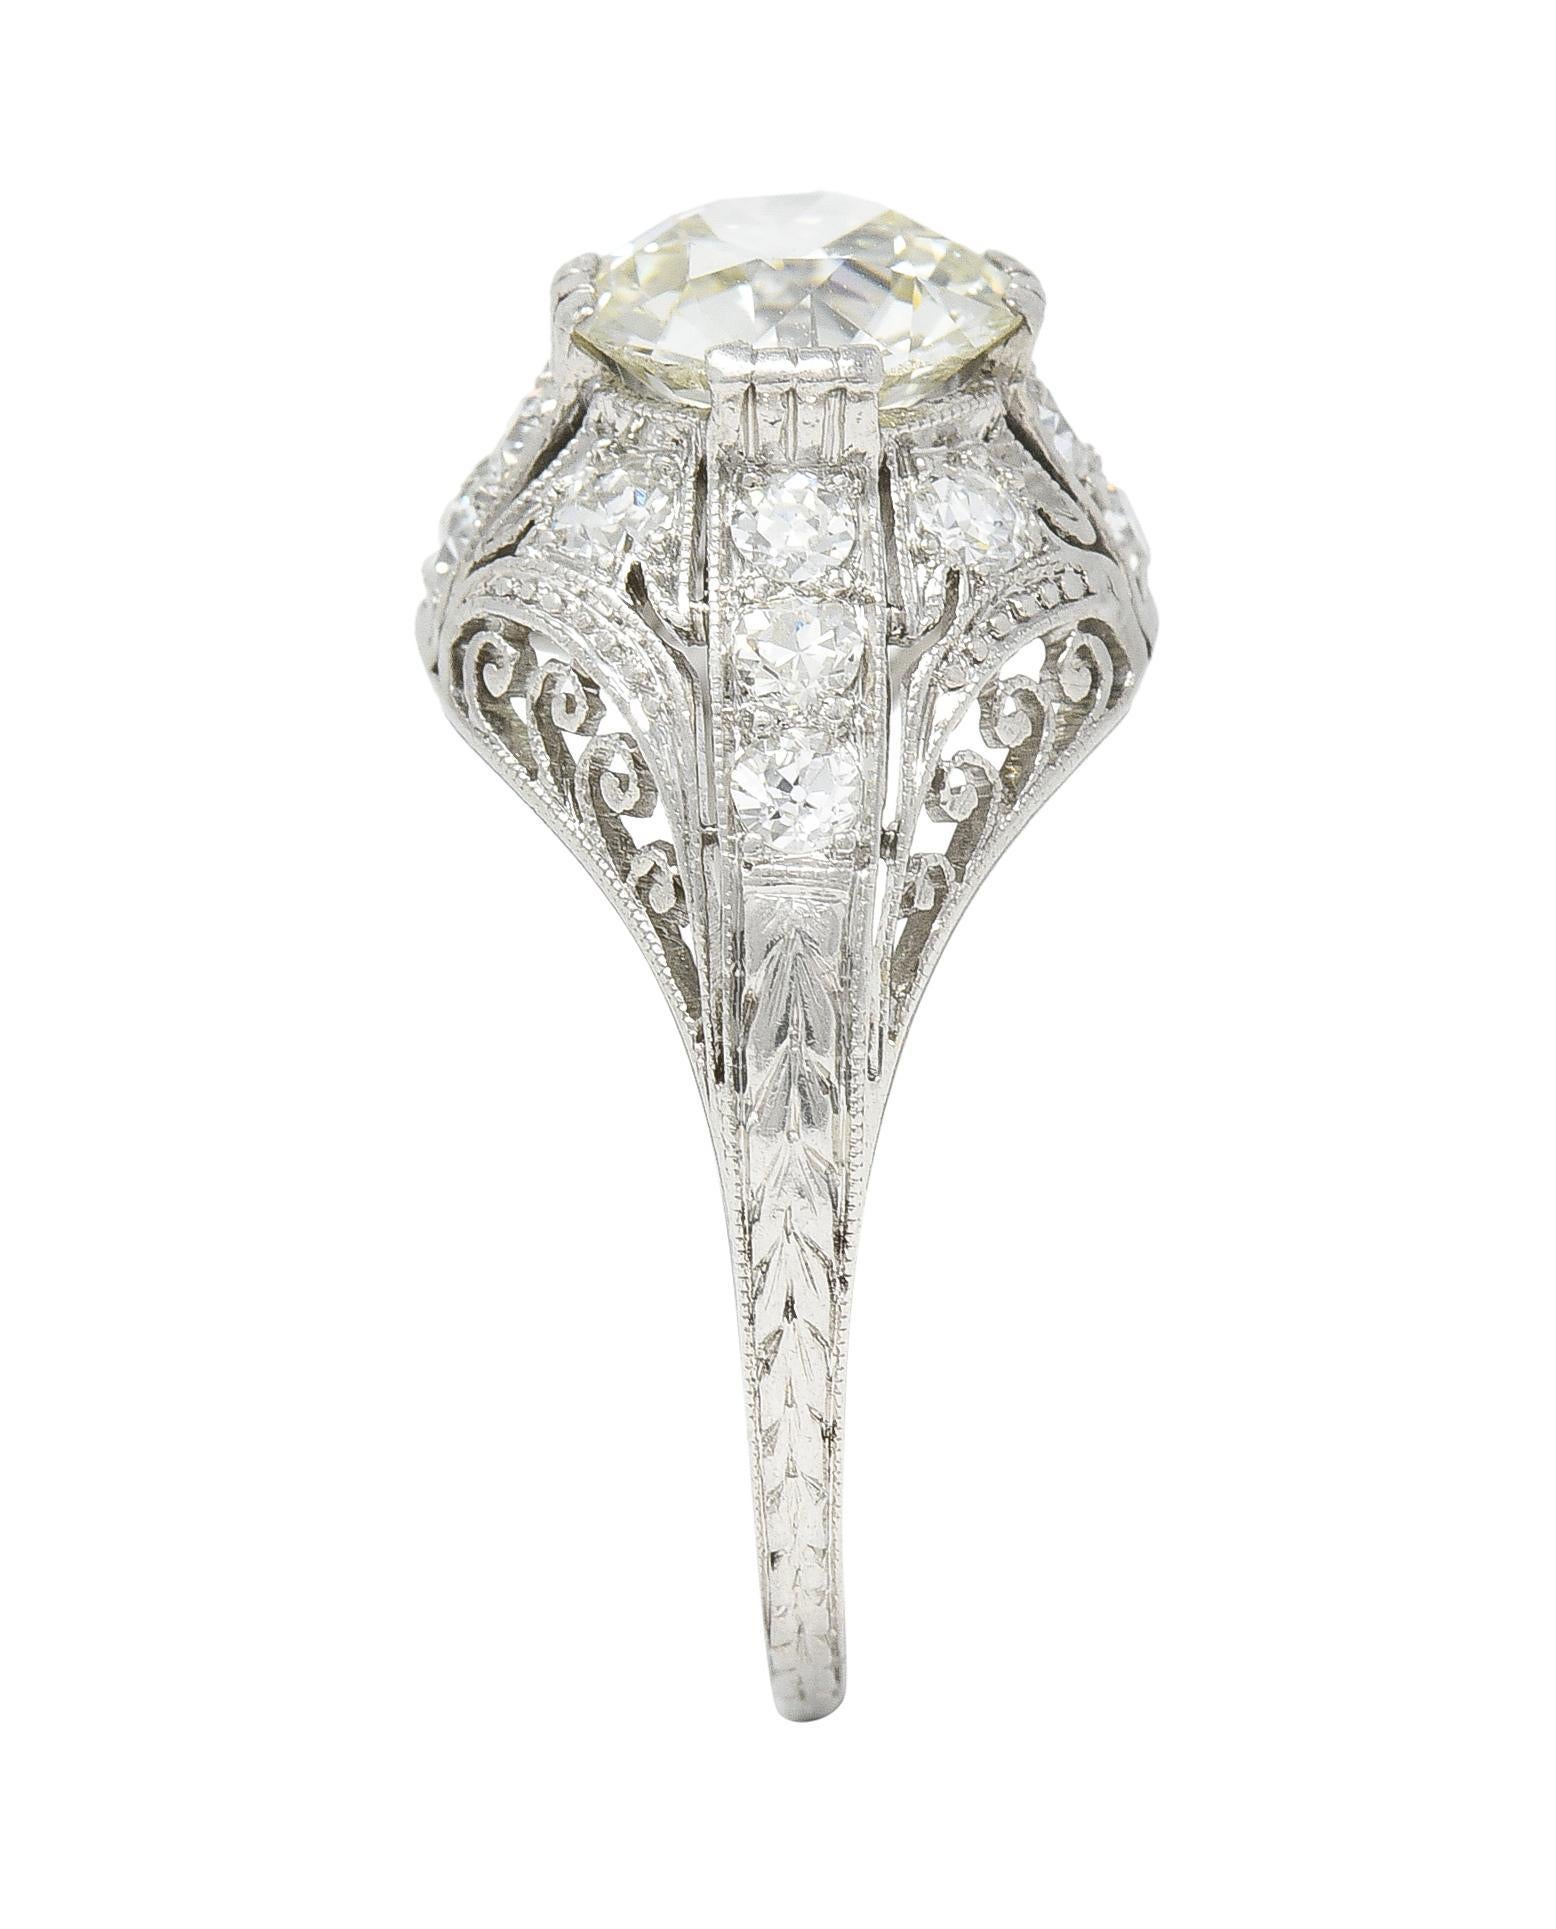 Edwardian 1.77 CTW Old European Cut Diamond Platinum Bombay Engagement Ring For Sale 6